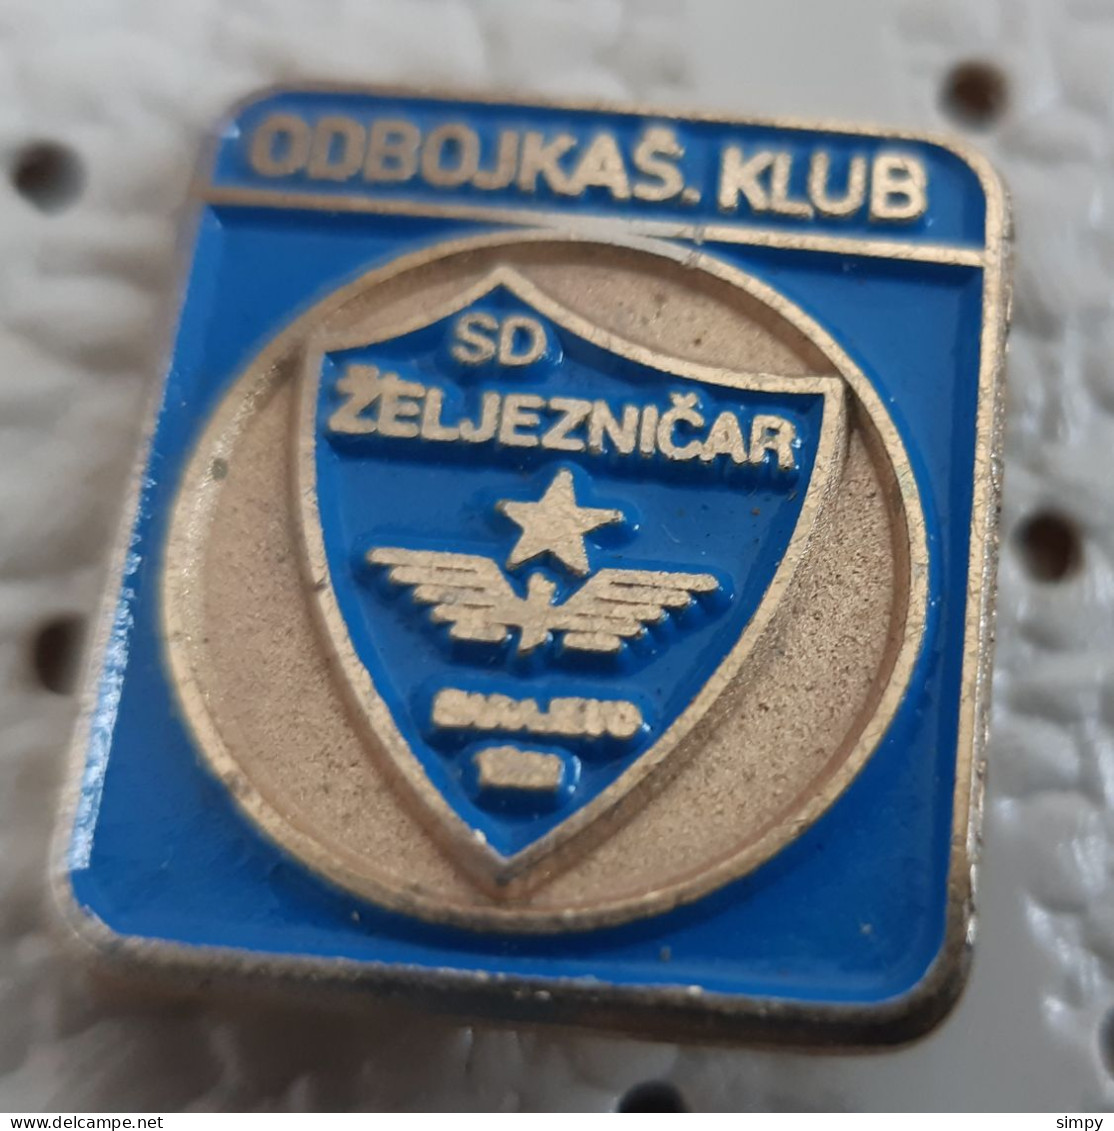 Volleyball Club Zeljeznicar Sarajevo Bosnia Ex Yugoslavia   Vintage Pin - Volleyball